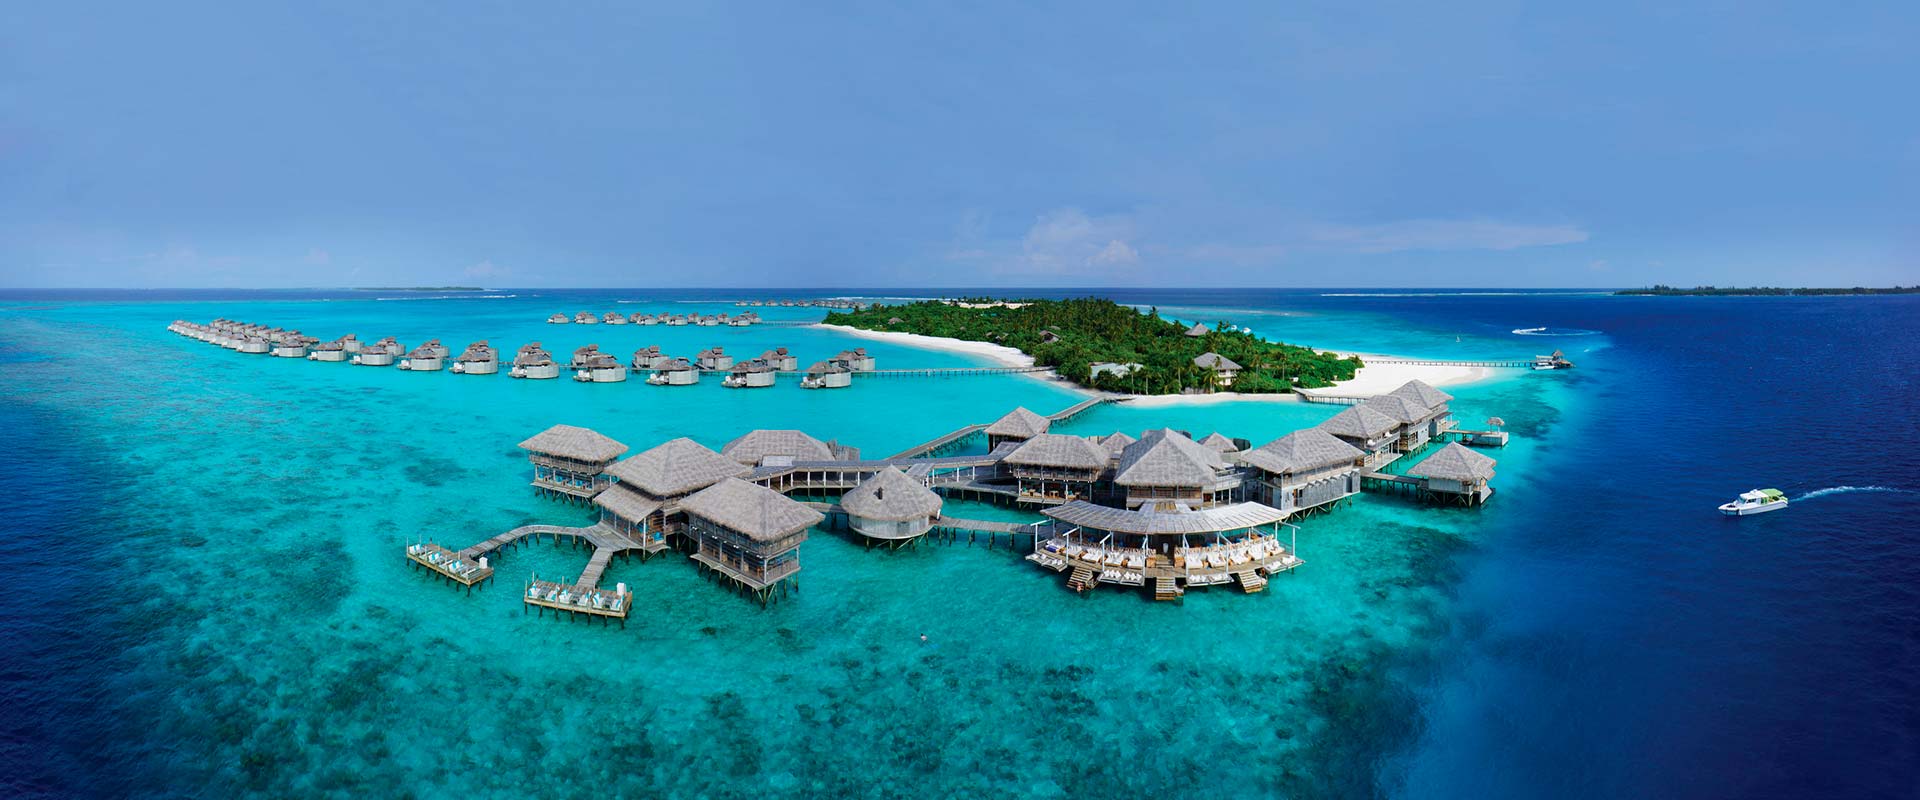 Maldivas, con seis sentidos